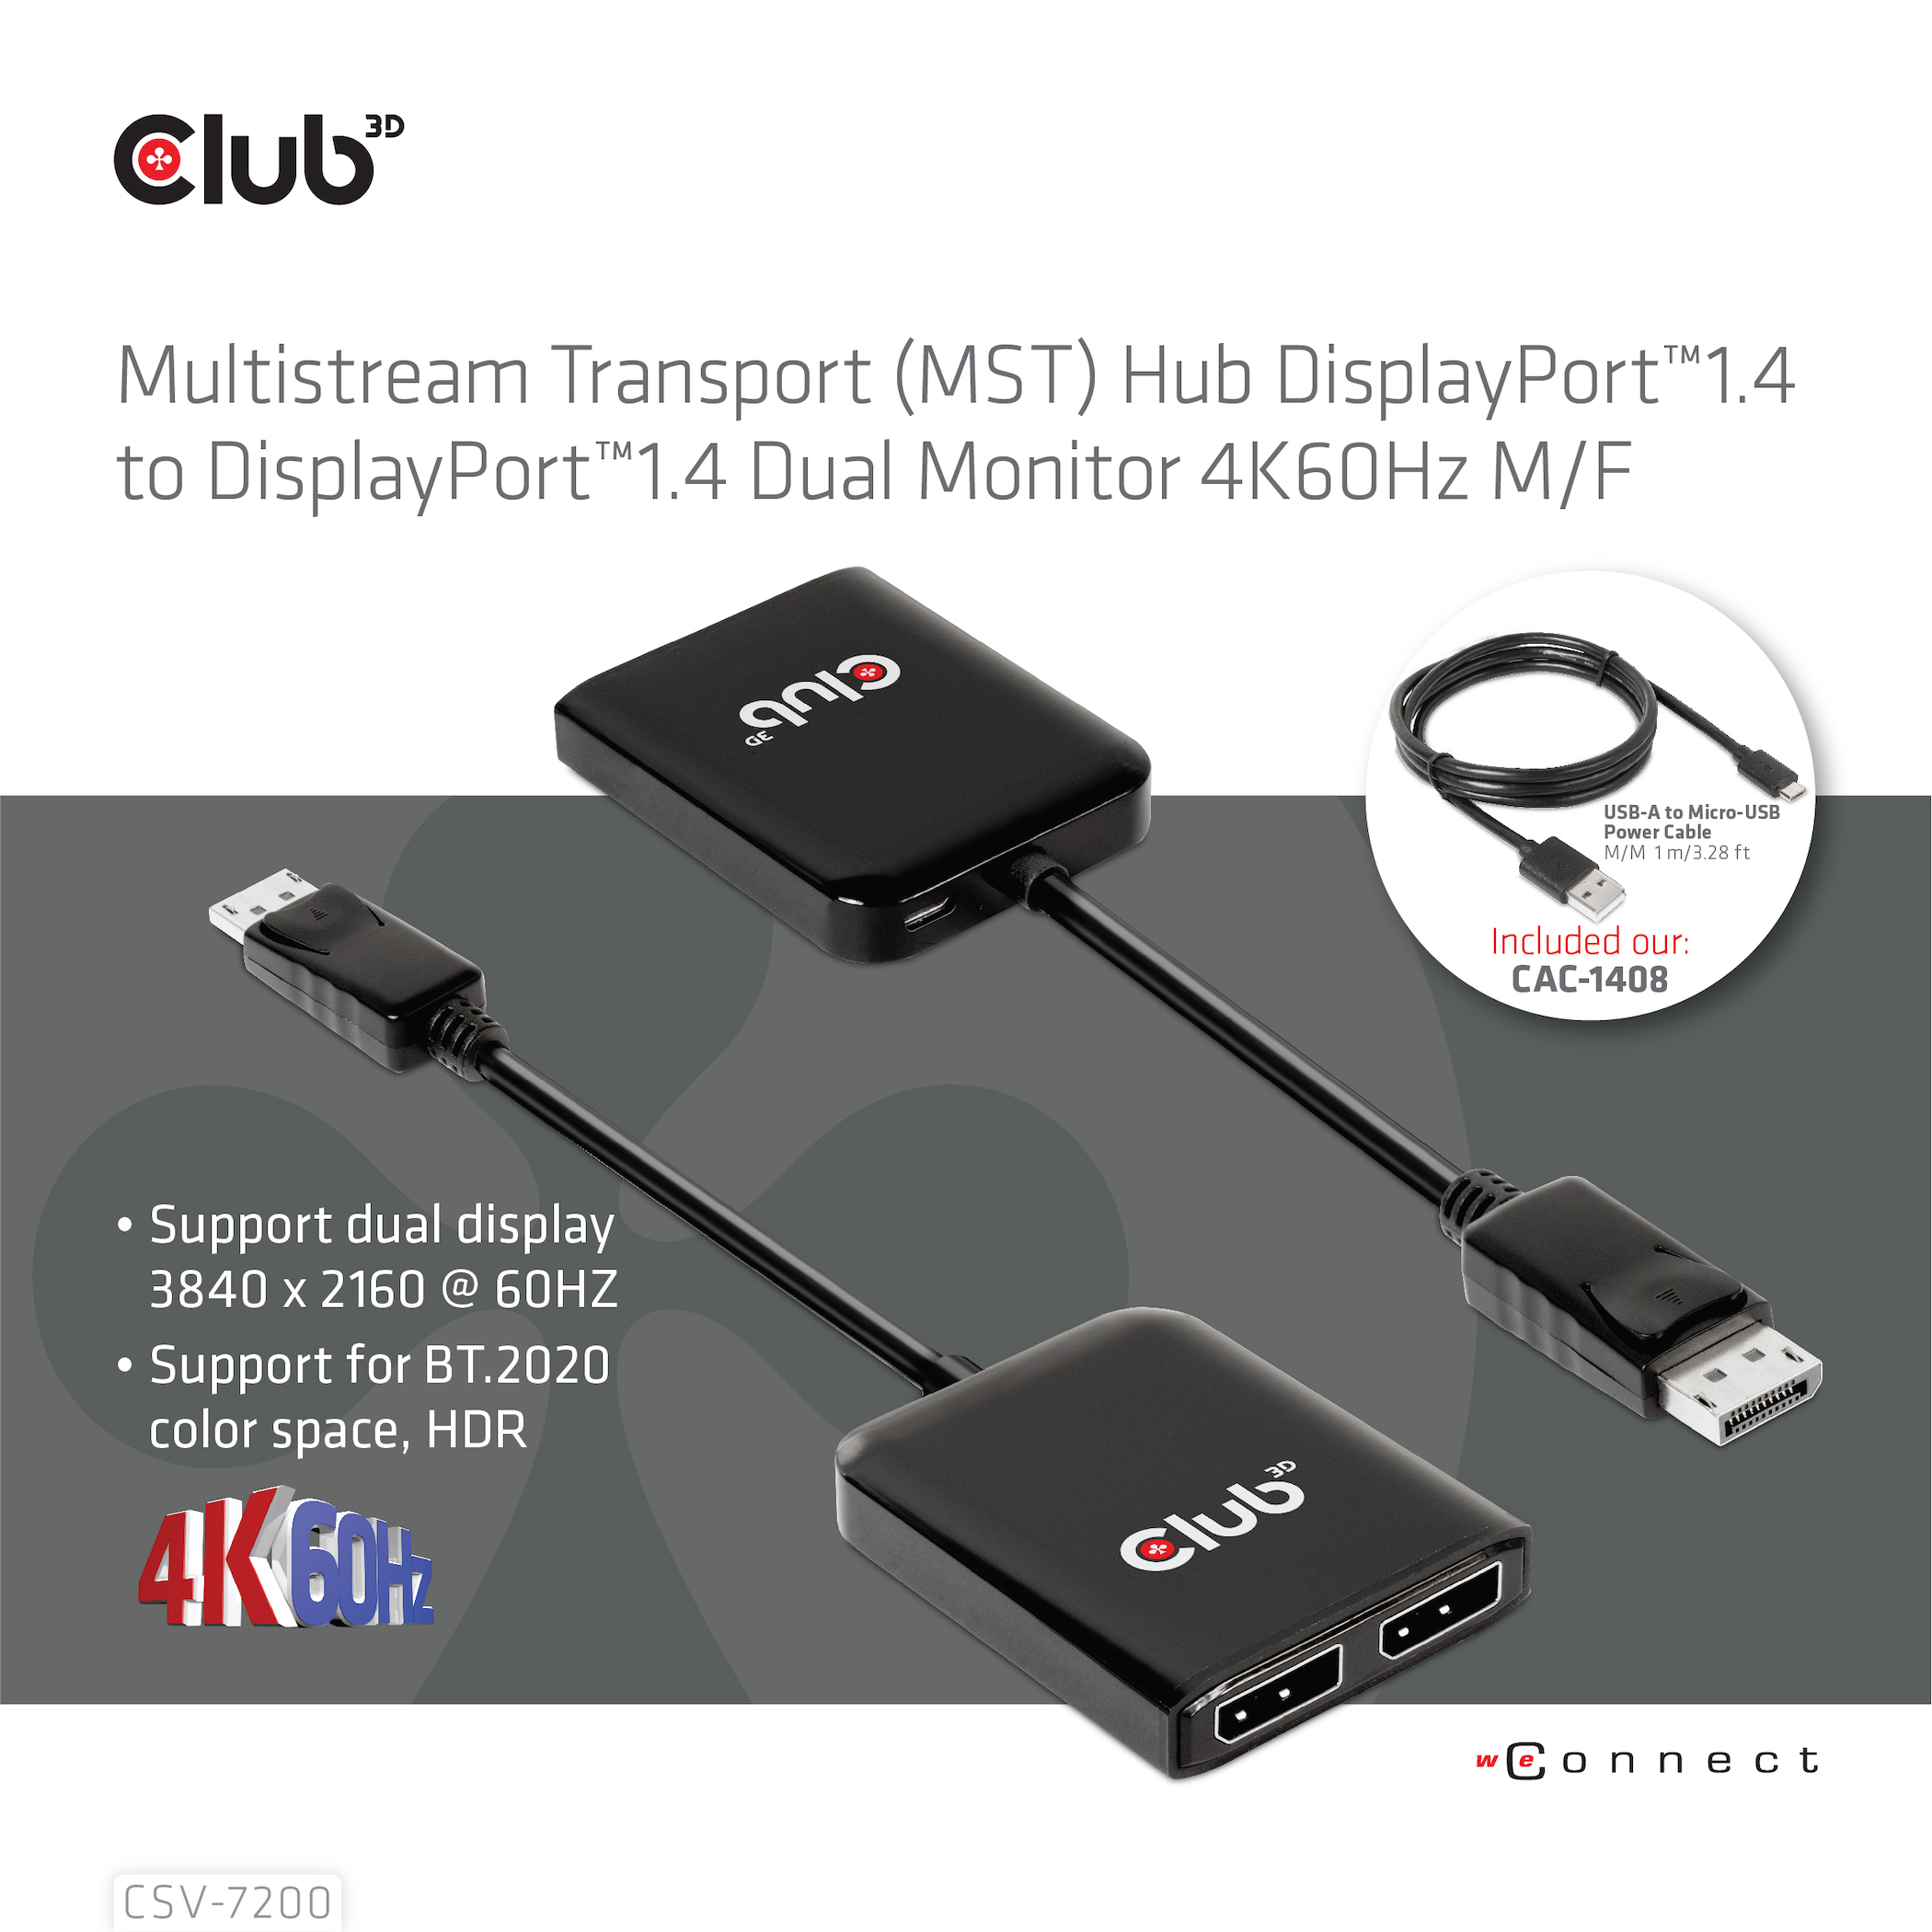 DP 1.4 TO 2 DISPLAYPORT 1.4 SUPPORTS UPTO 2 4K60HZ - USB POWERED